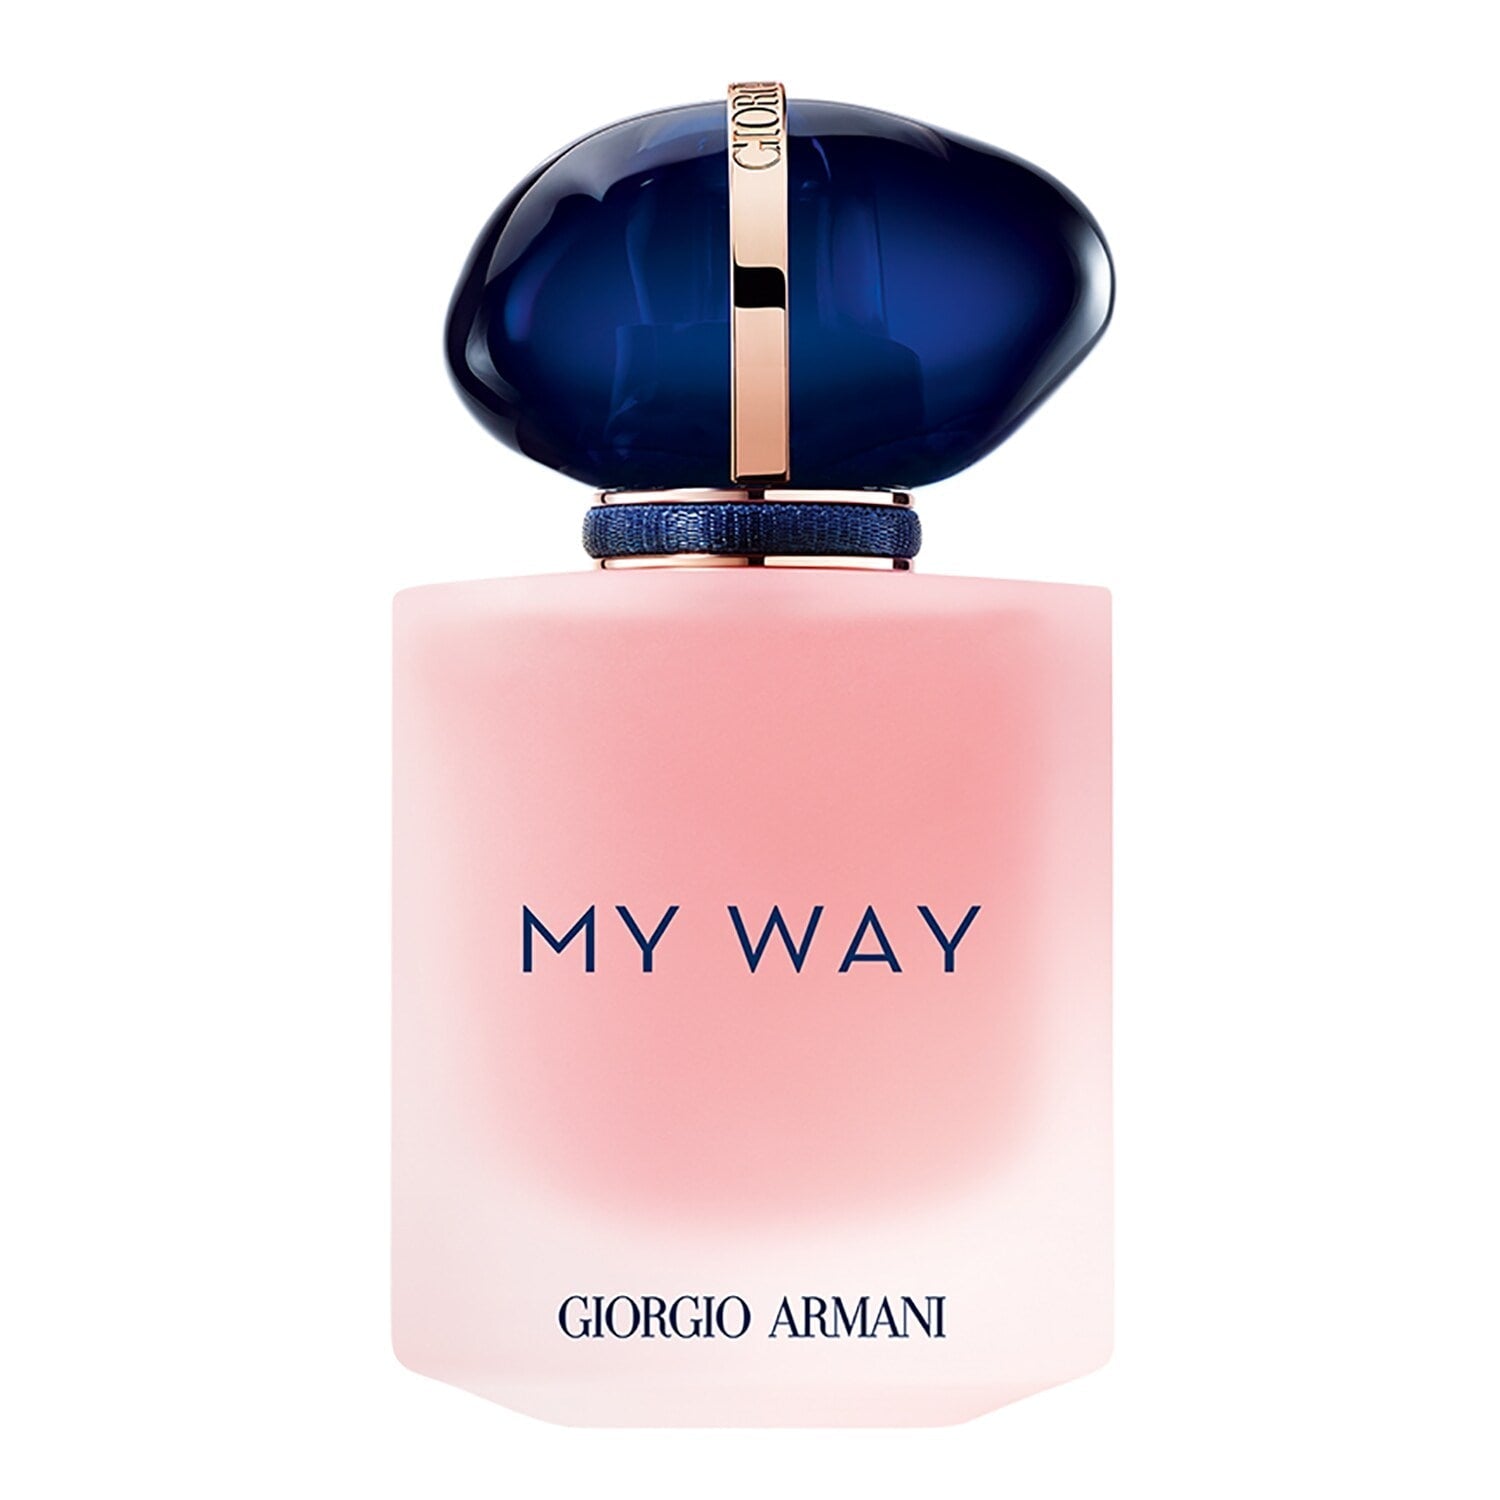 Armani My Way eau de parfum - beautyonedz